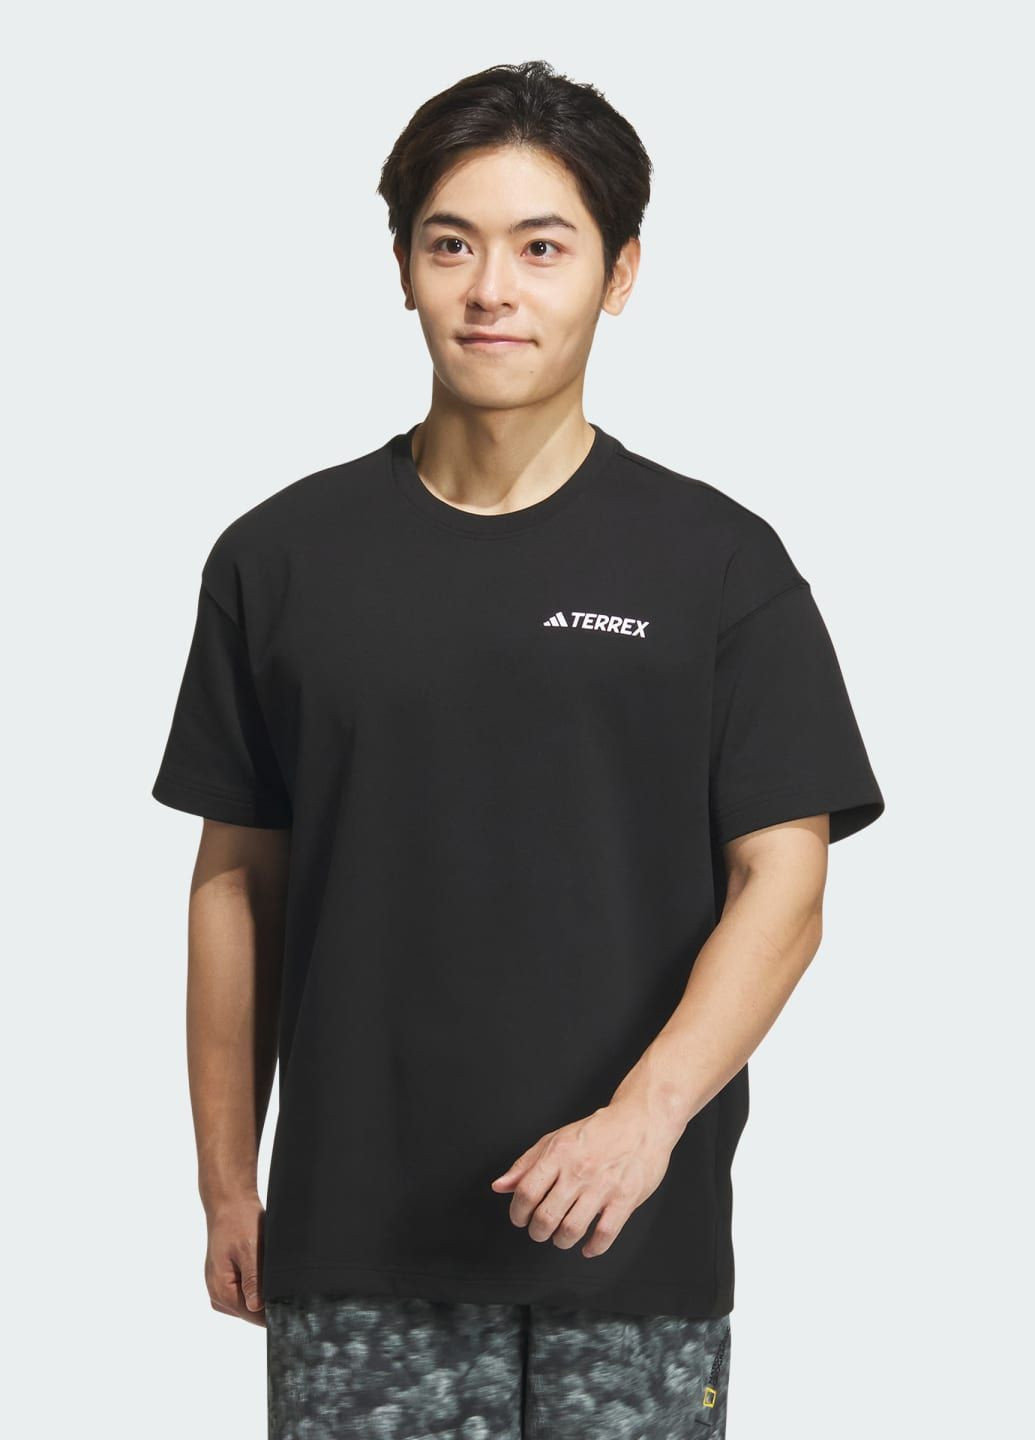 Черная футболка national geographic aeroready graphic short sleeve adidas